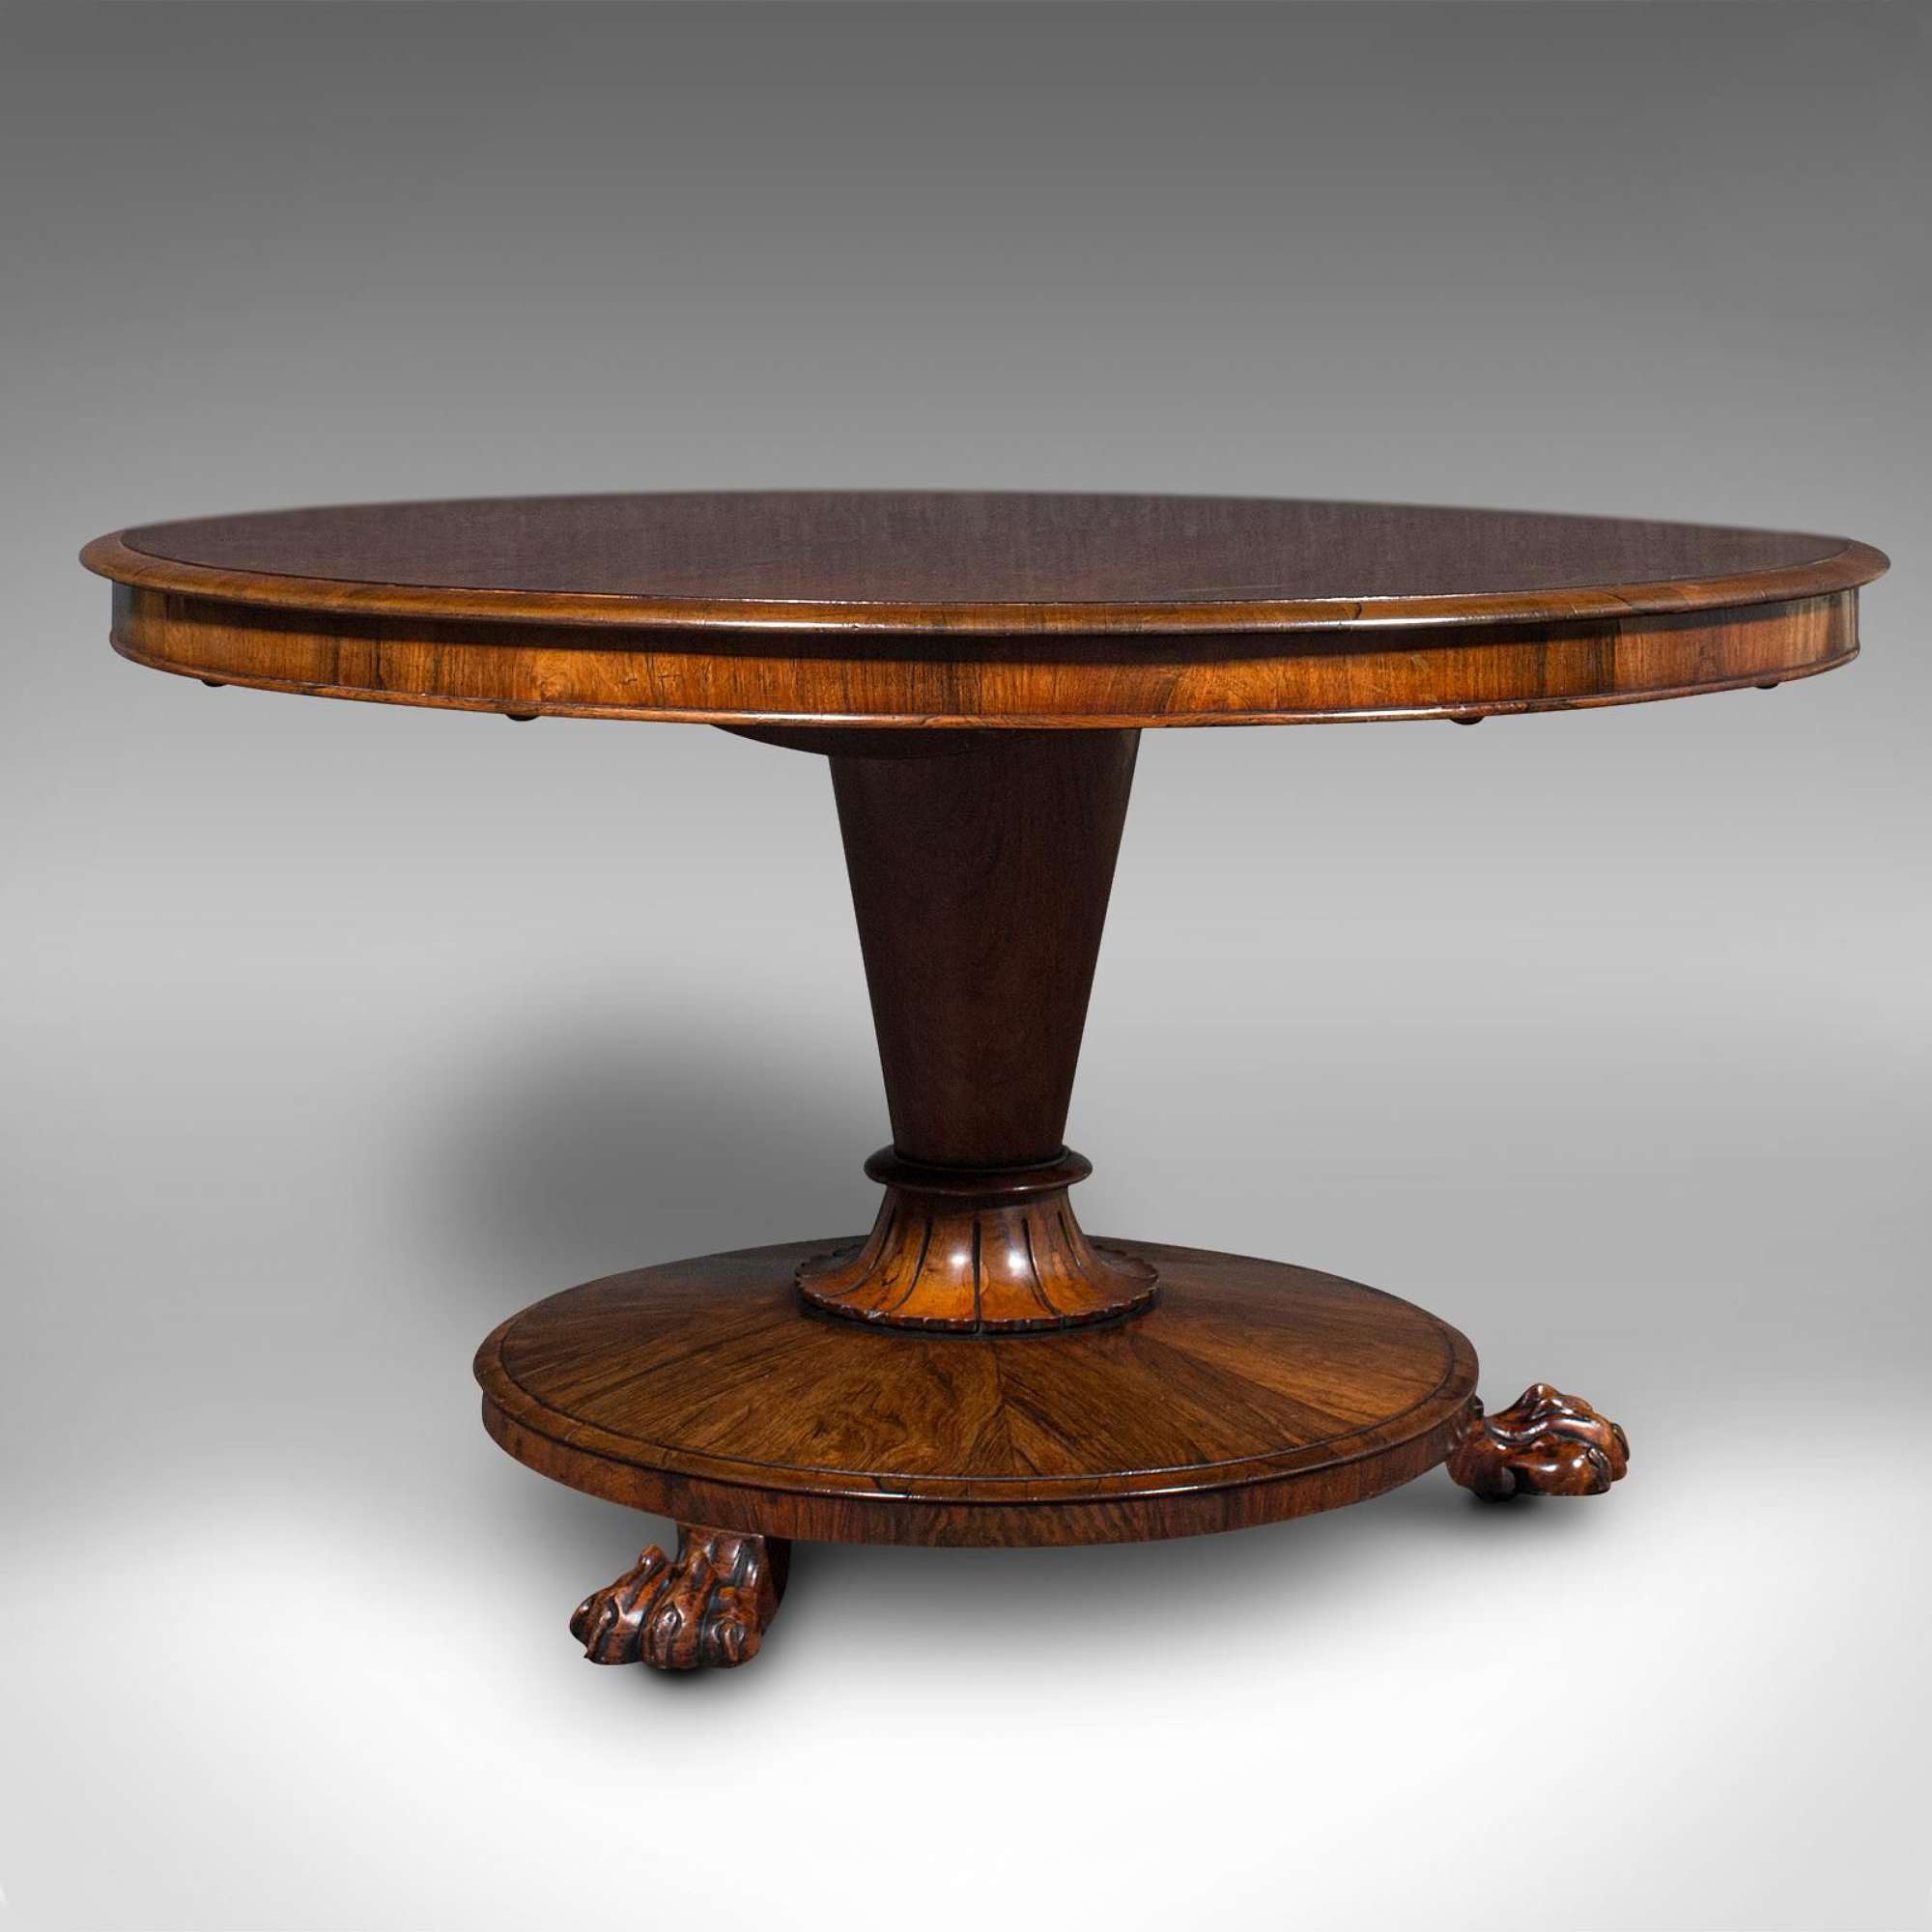 Antique Circular Breakfast Table, English, Tilting Top, Centrepiece, William Iv